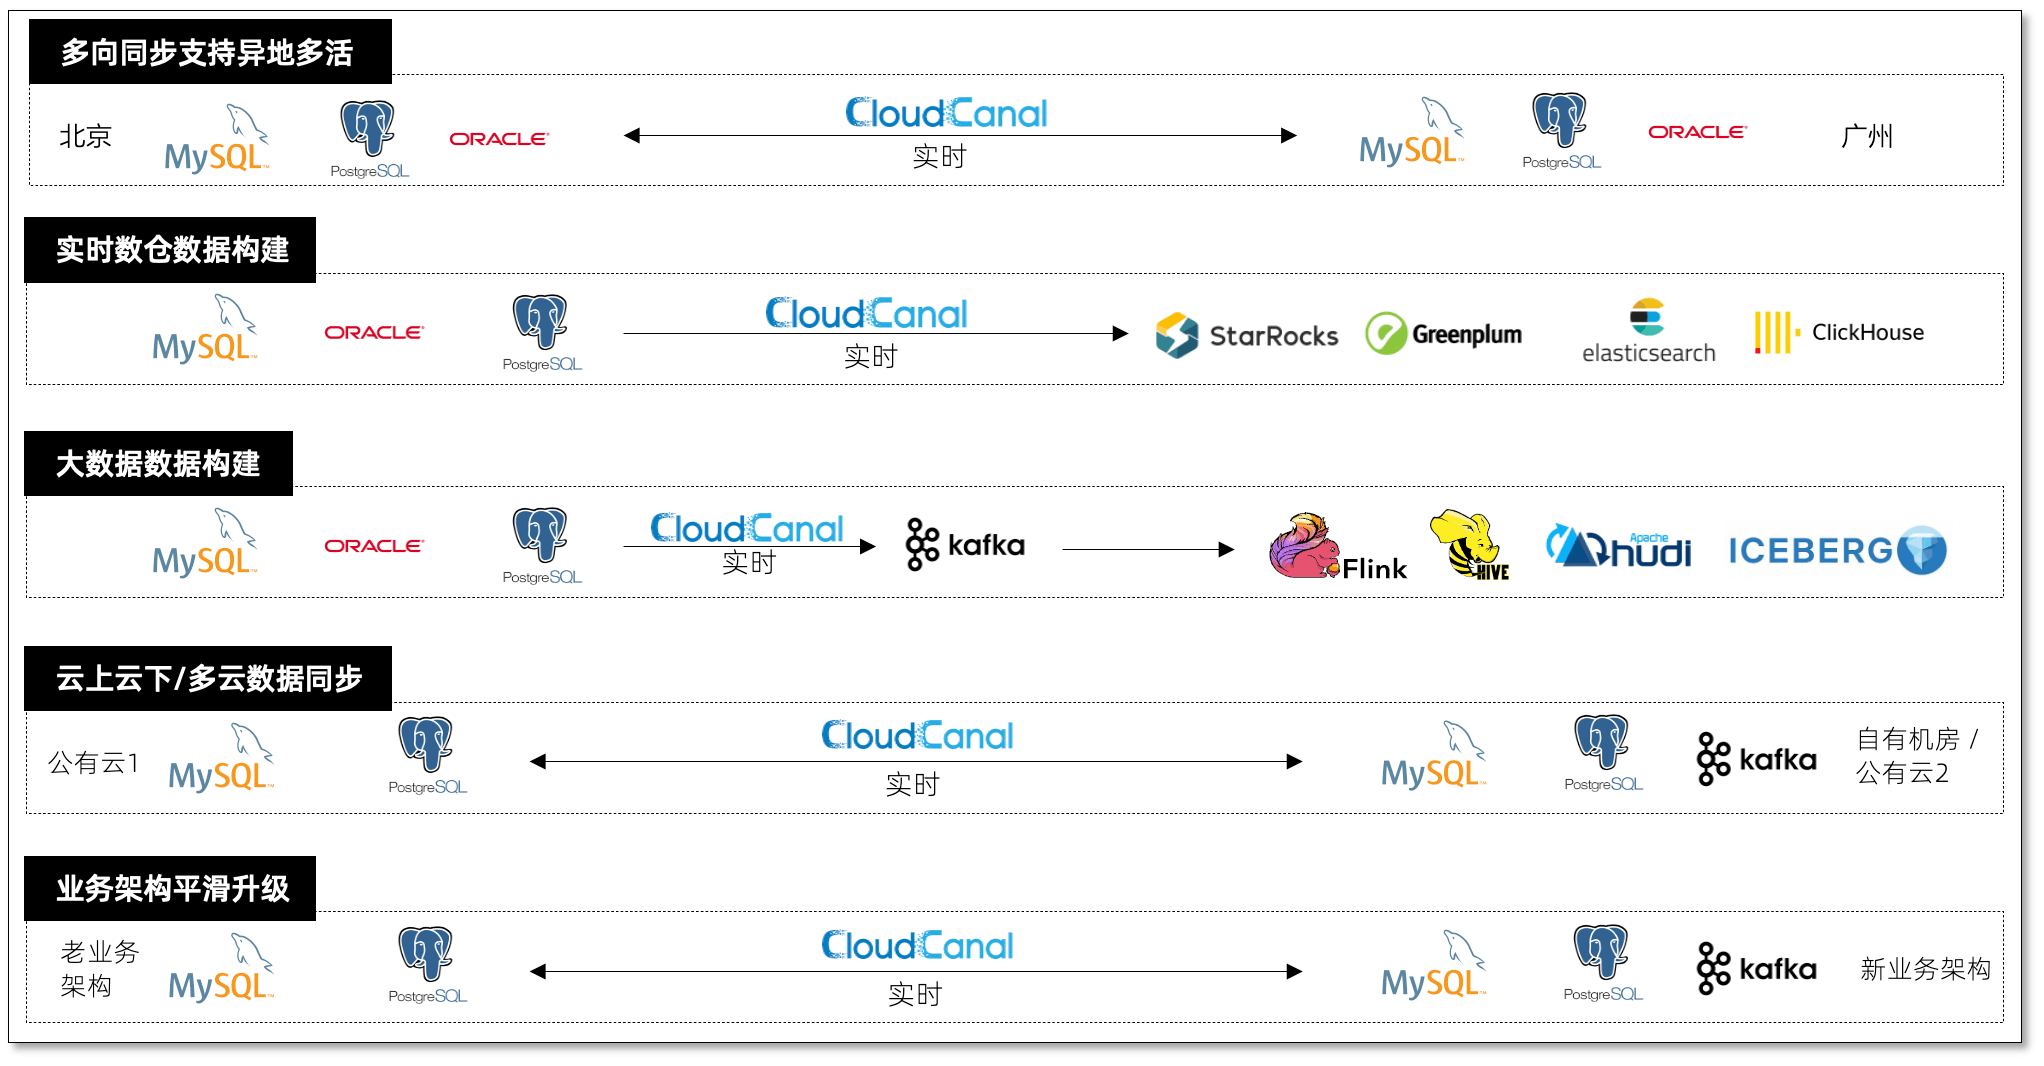 cloudcanal business scenarios